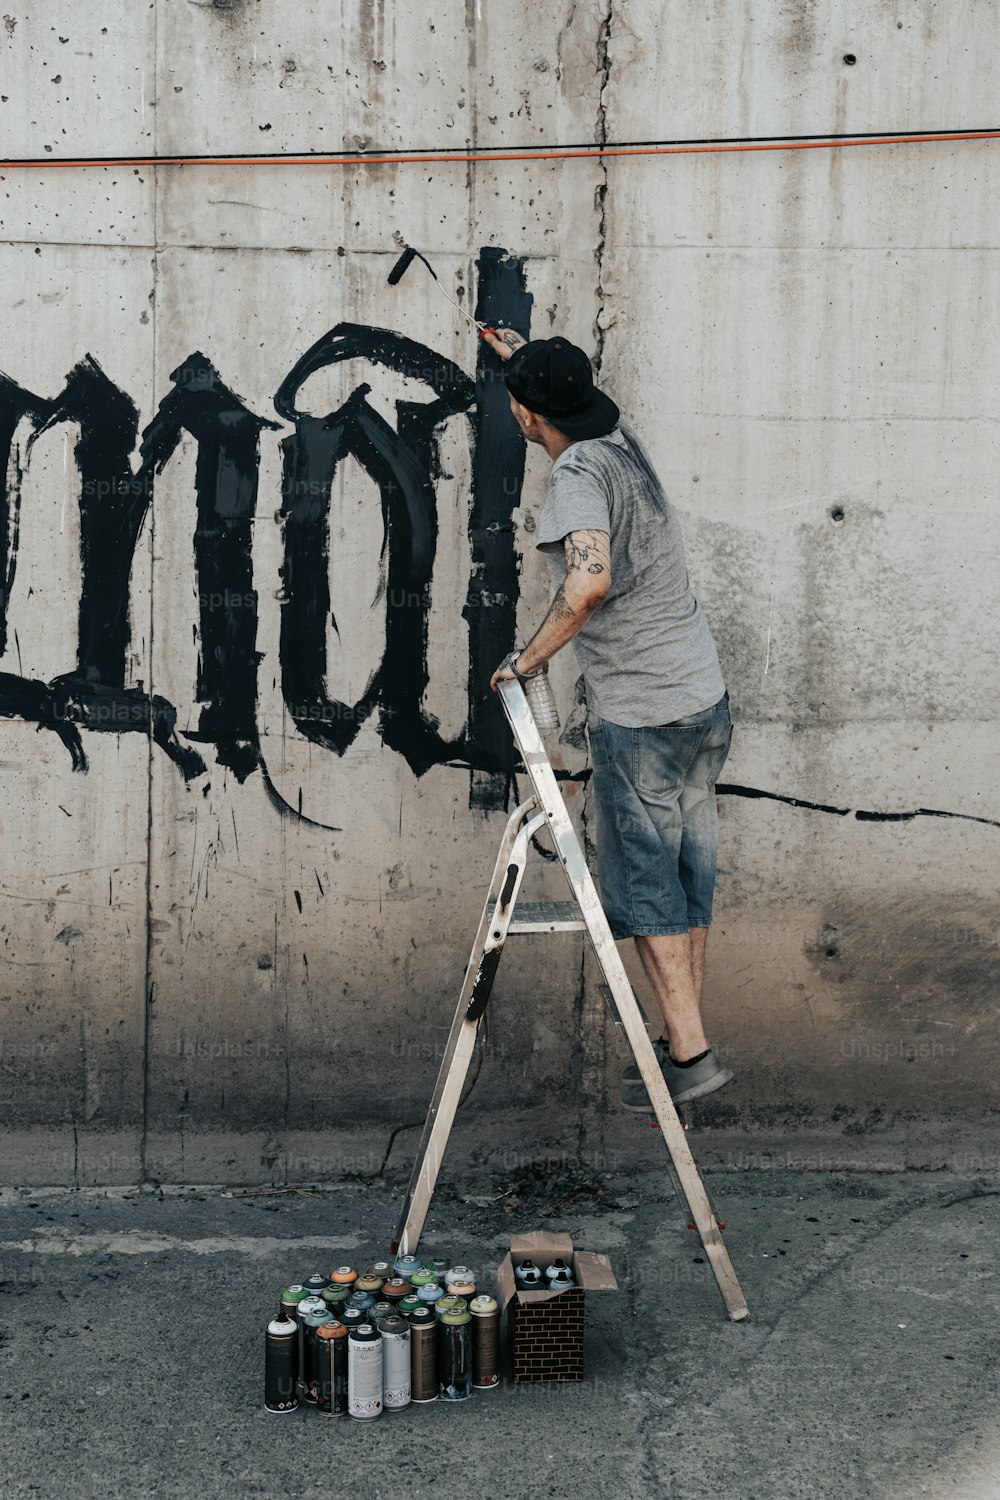 a man on a ladder painting graffiti on a wall